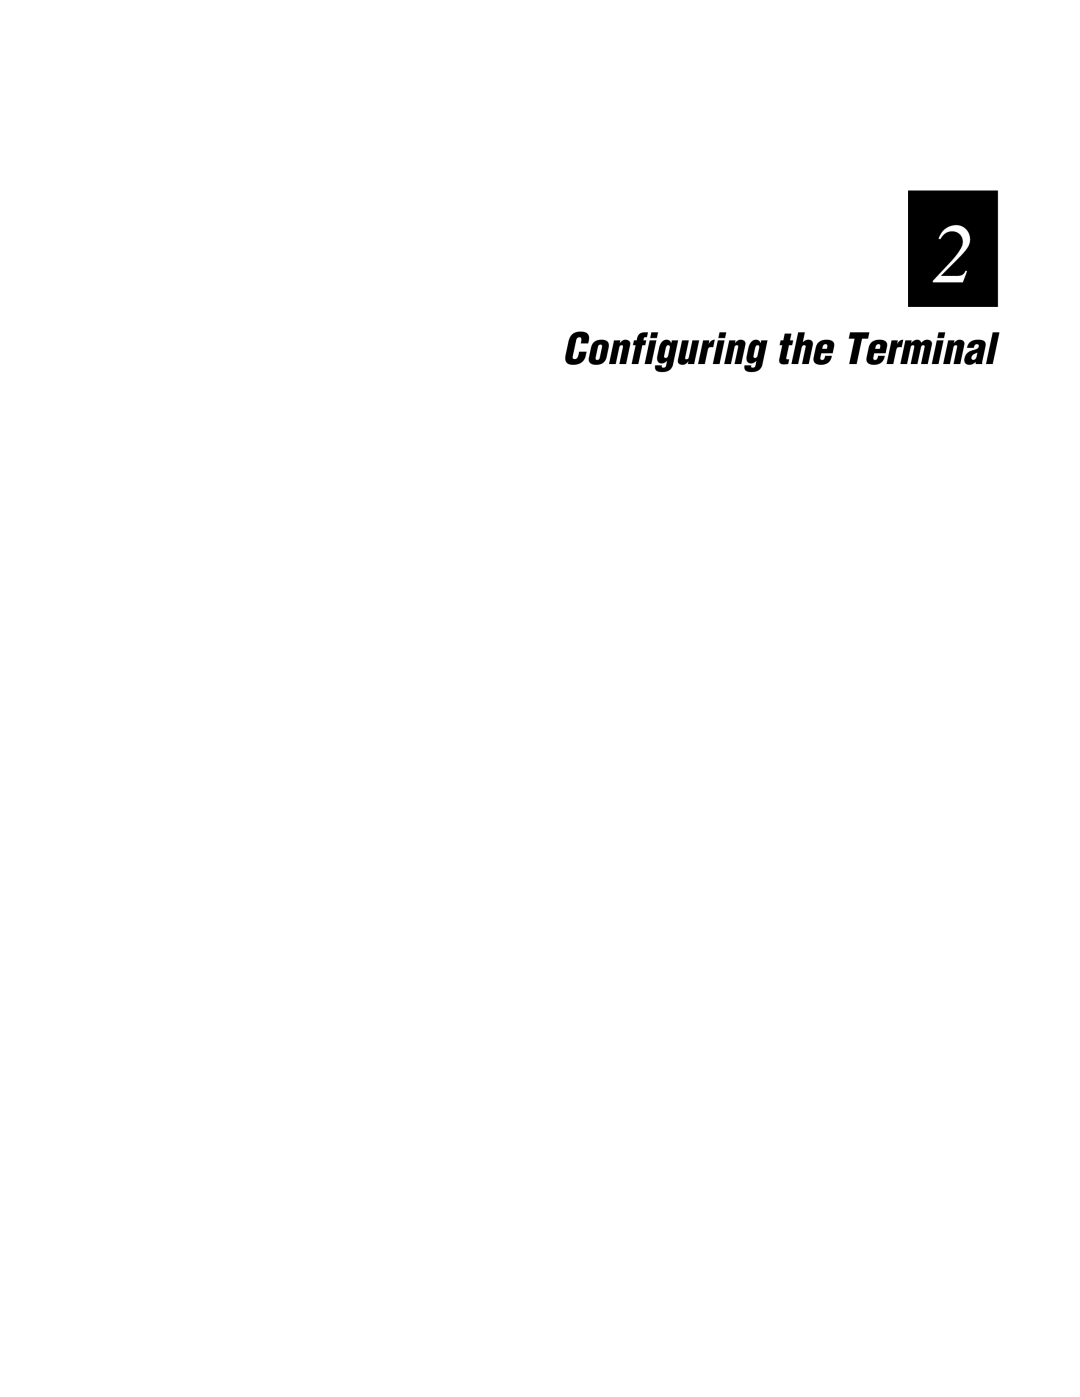 IBM 243X user manual Configuring the Terminal 